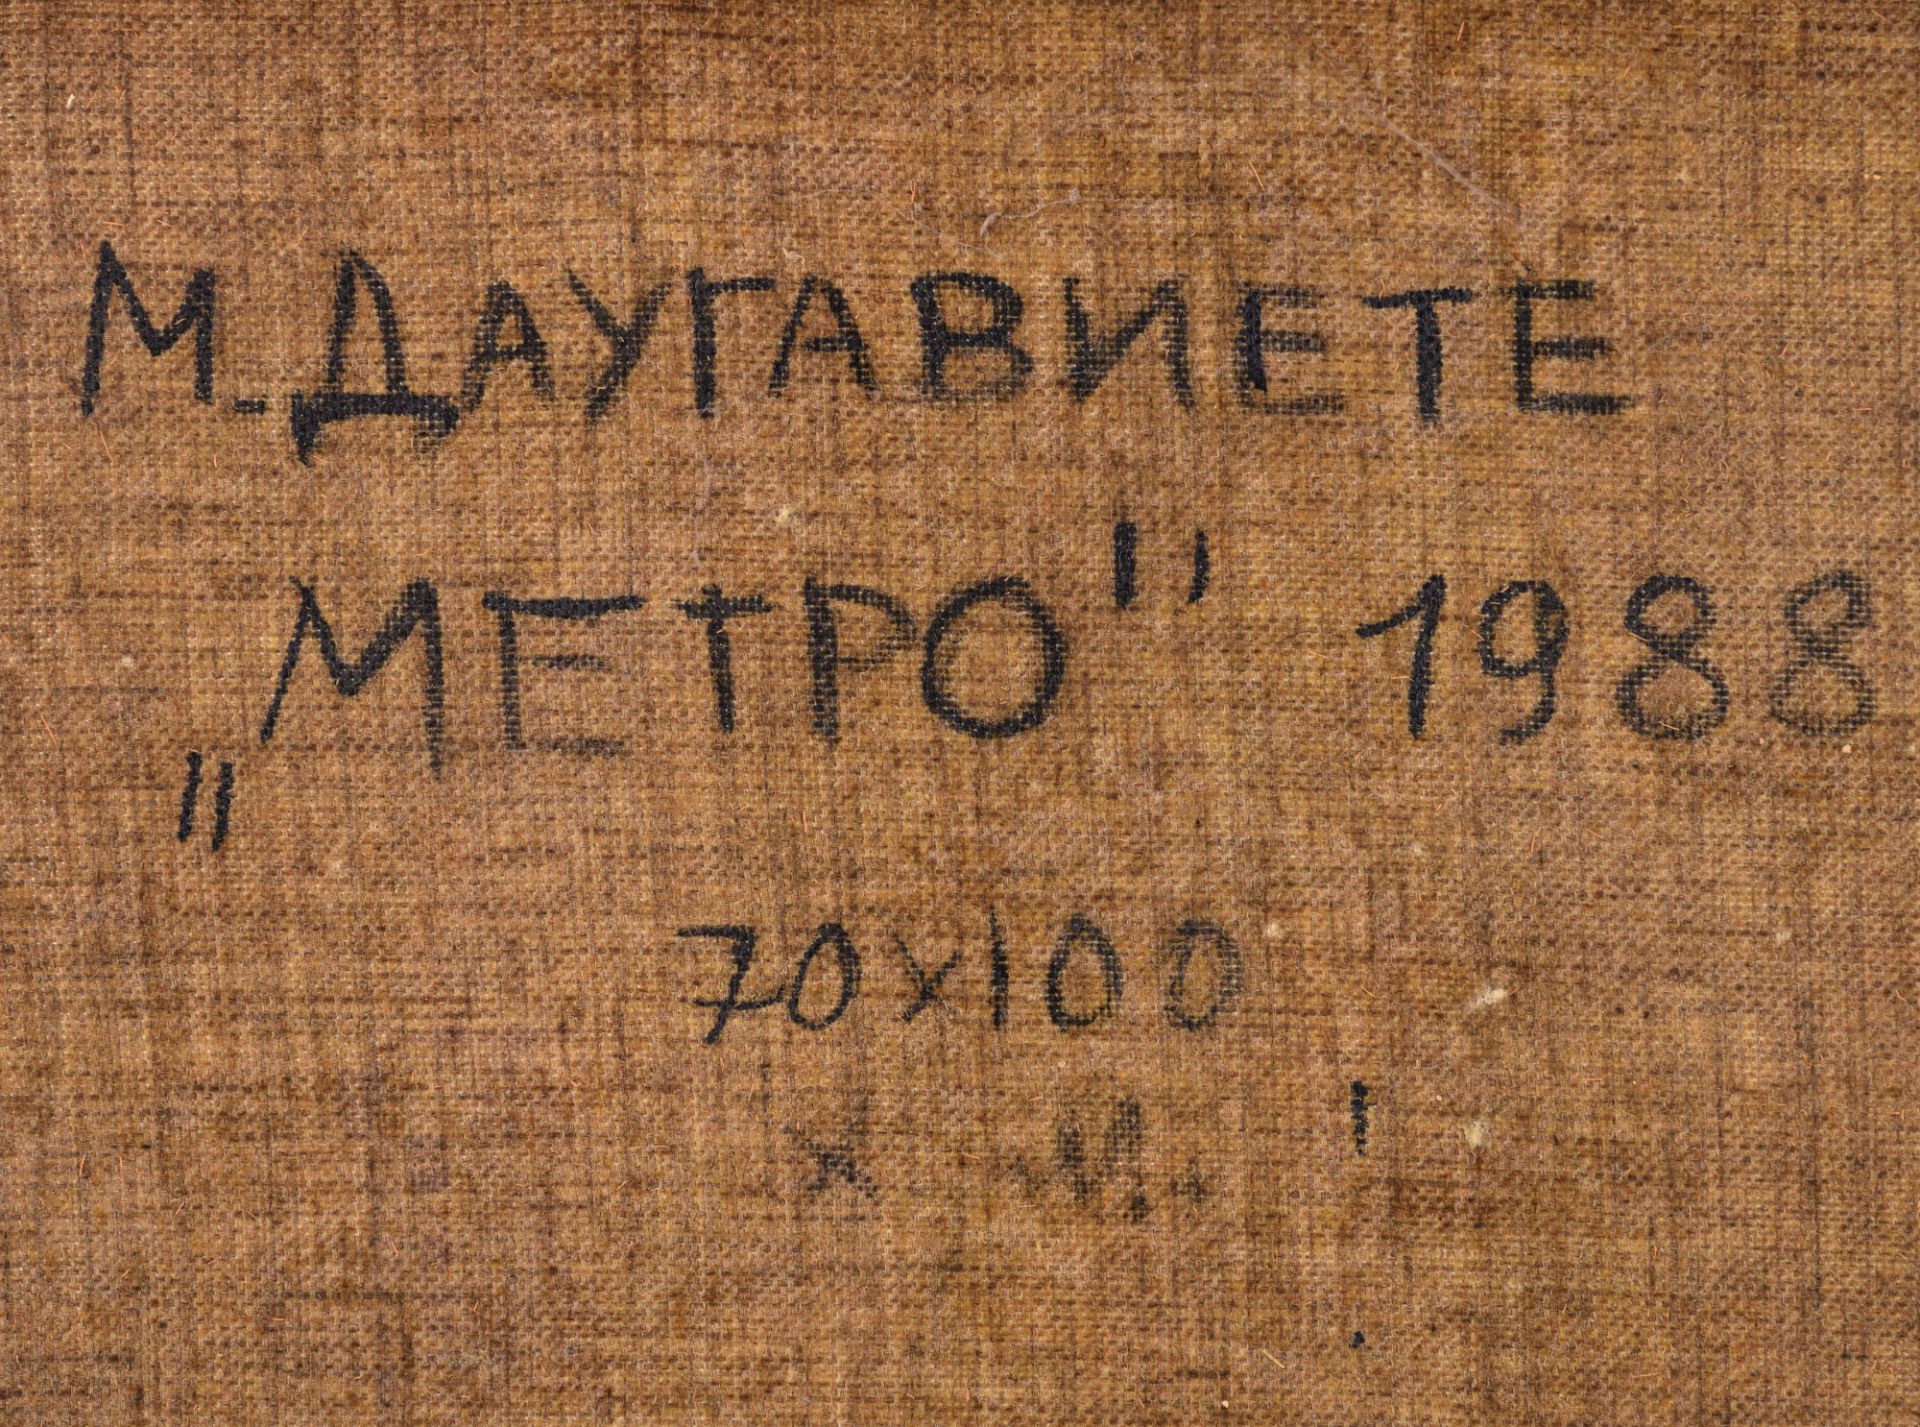 ?ay?a??ete M. (Cyrillic for Dayhavyete), 'Metro', dated 1988, oil on canvas, 70 x 100 cm, Is possibl - Bild 5 aus 6